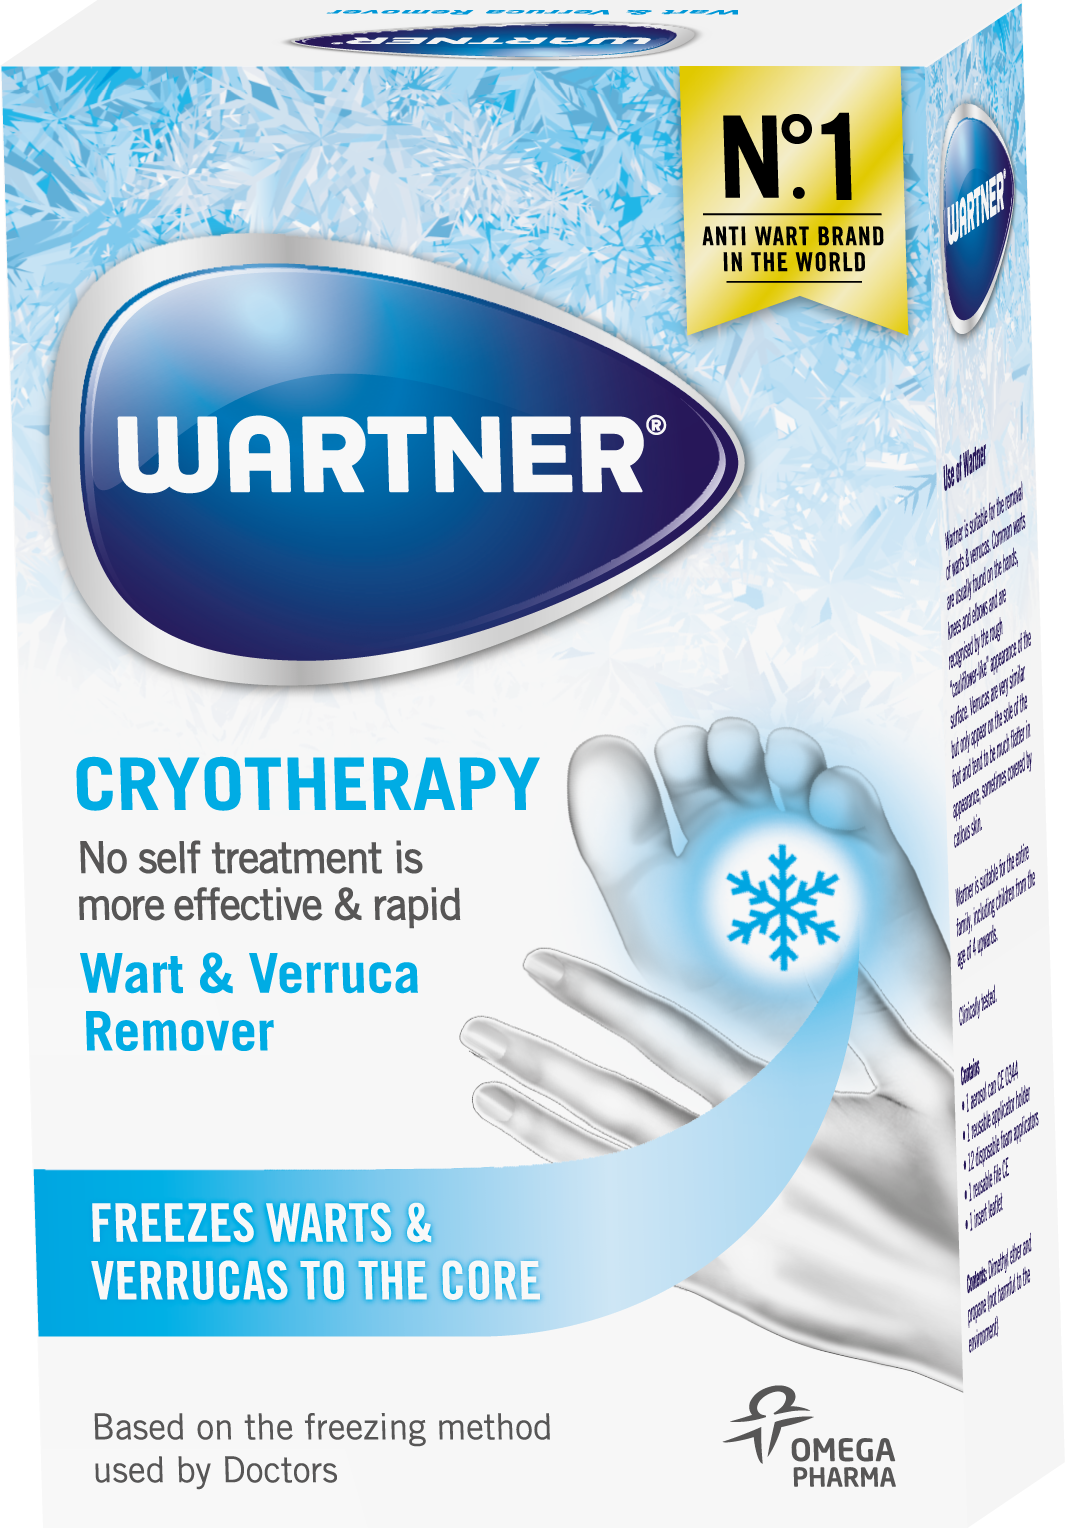 Wartner, the N°1 anti-wart brand in the 